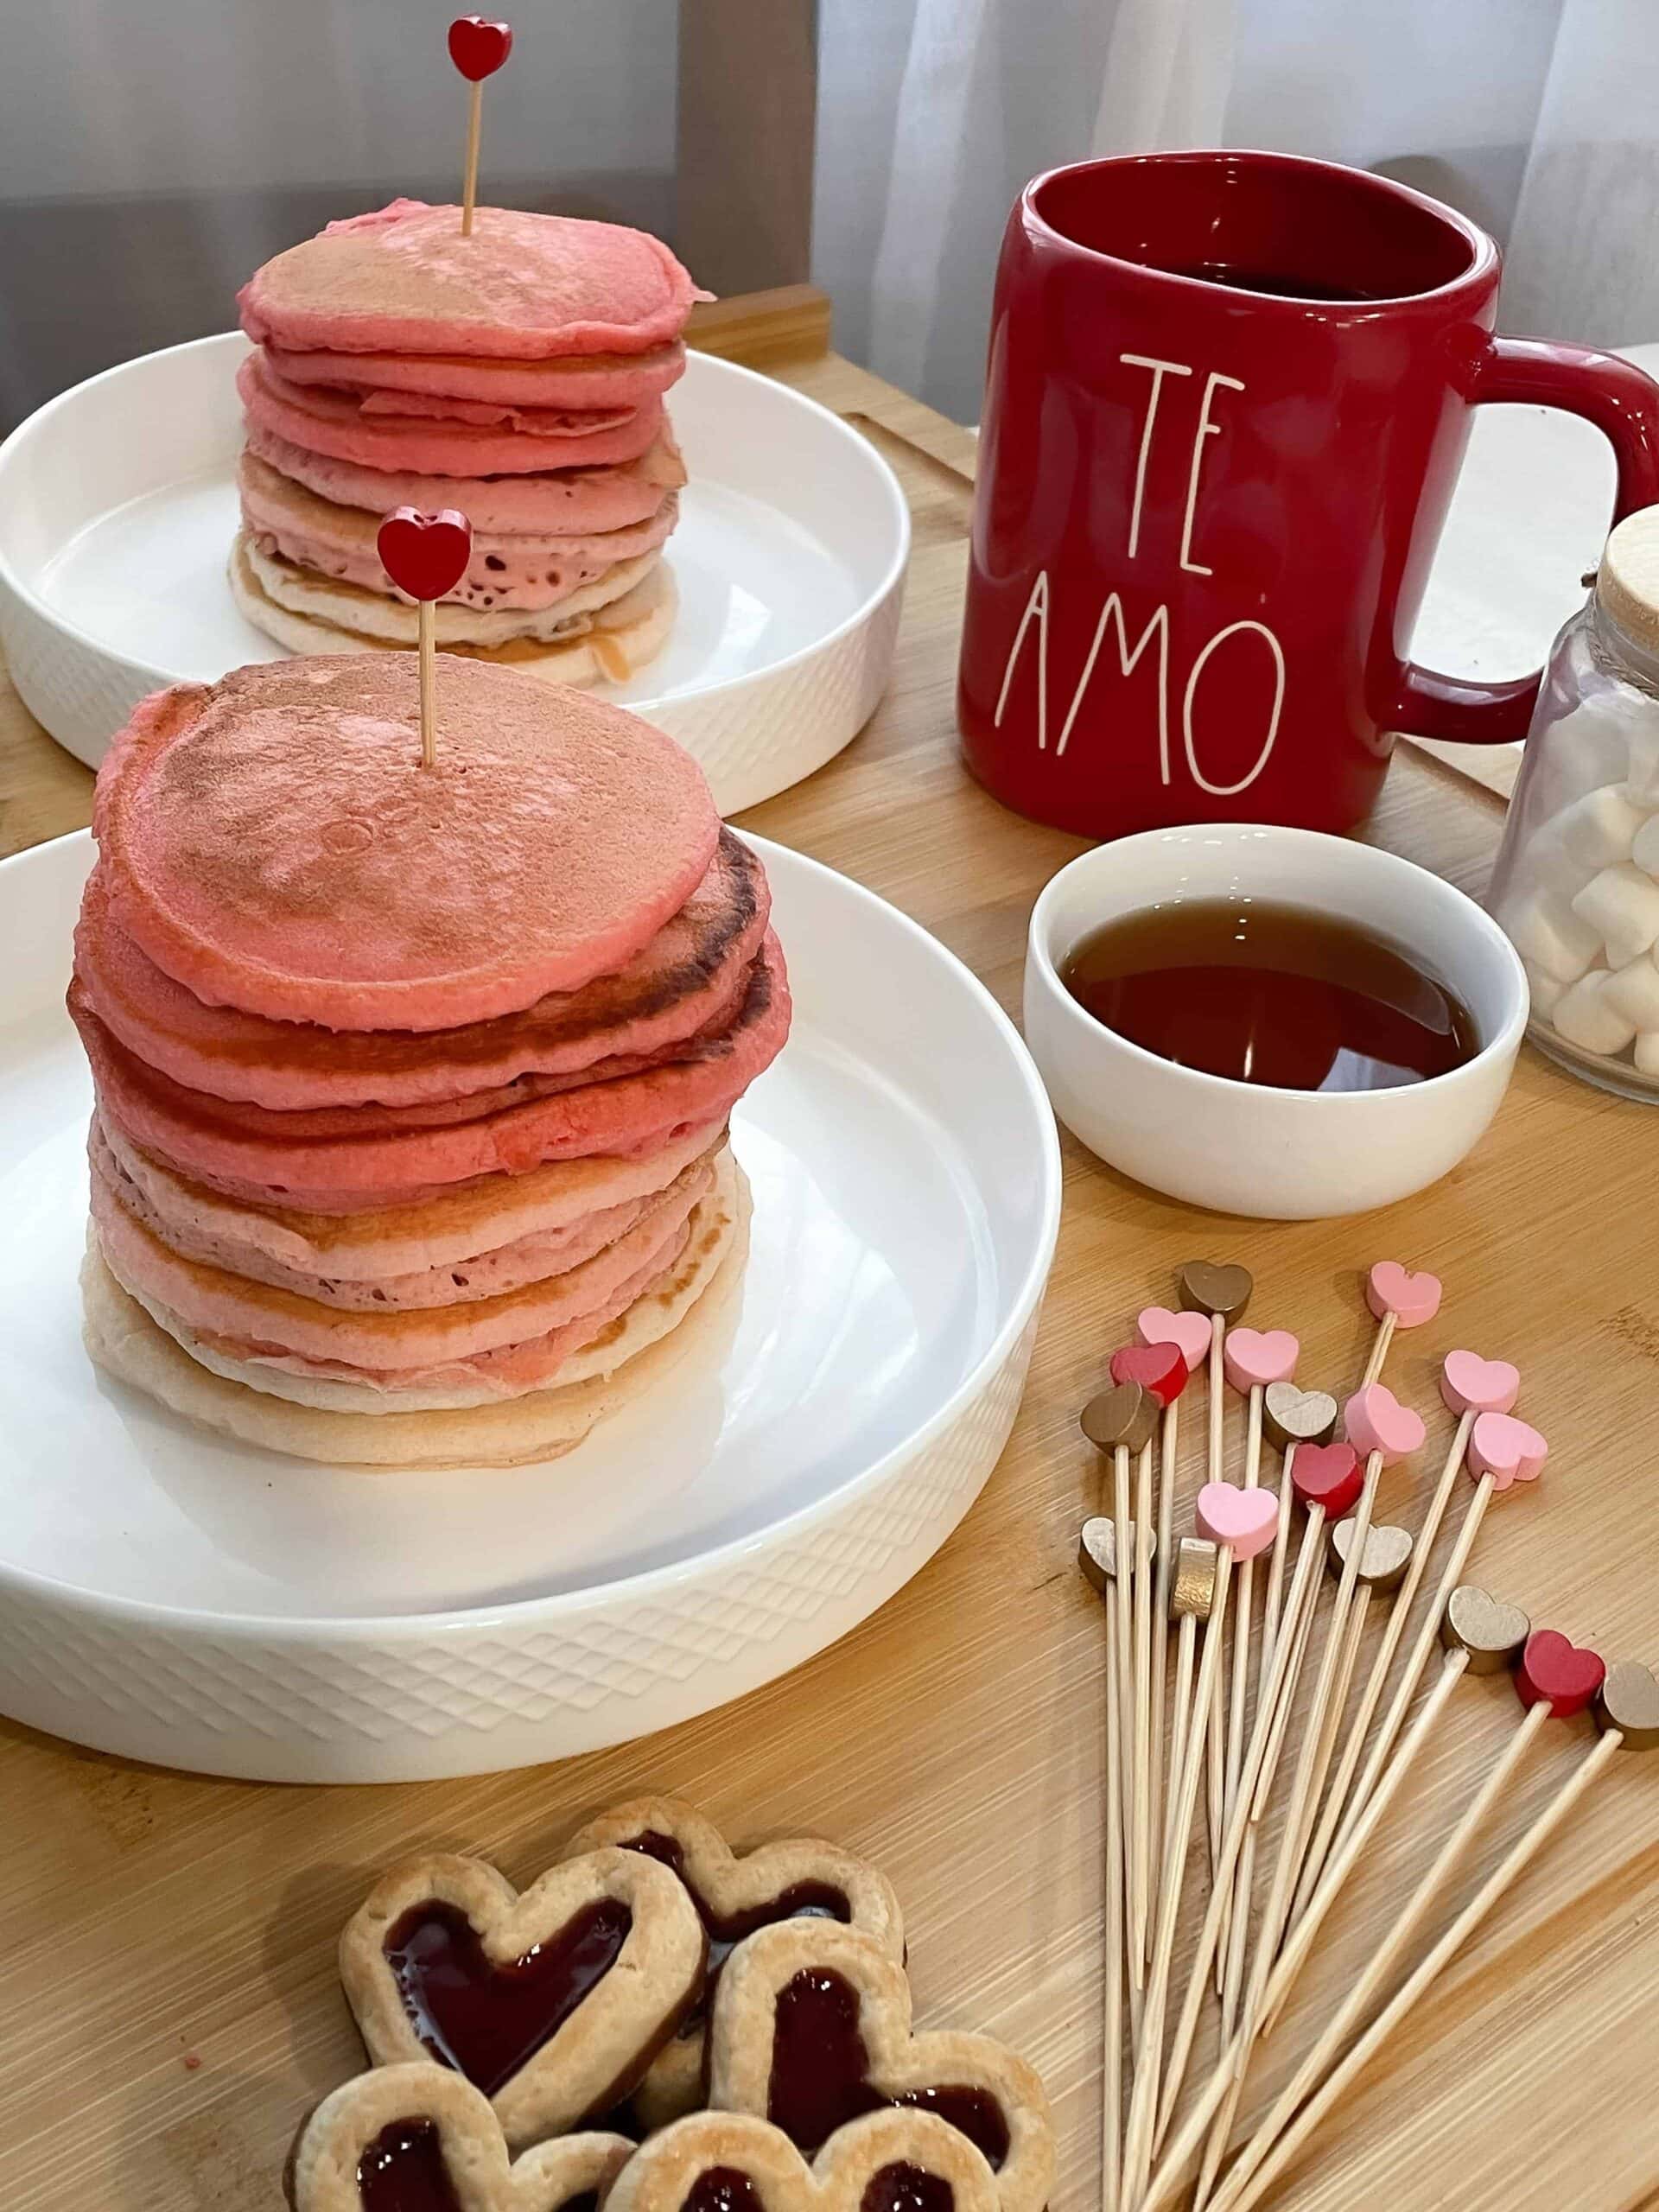 Valentine's Day Pancakes